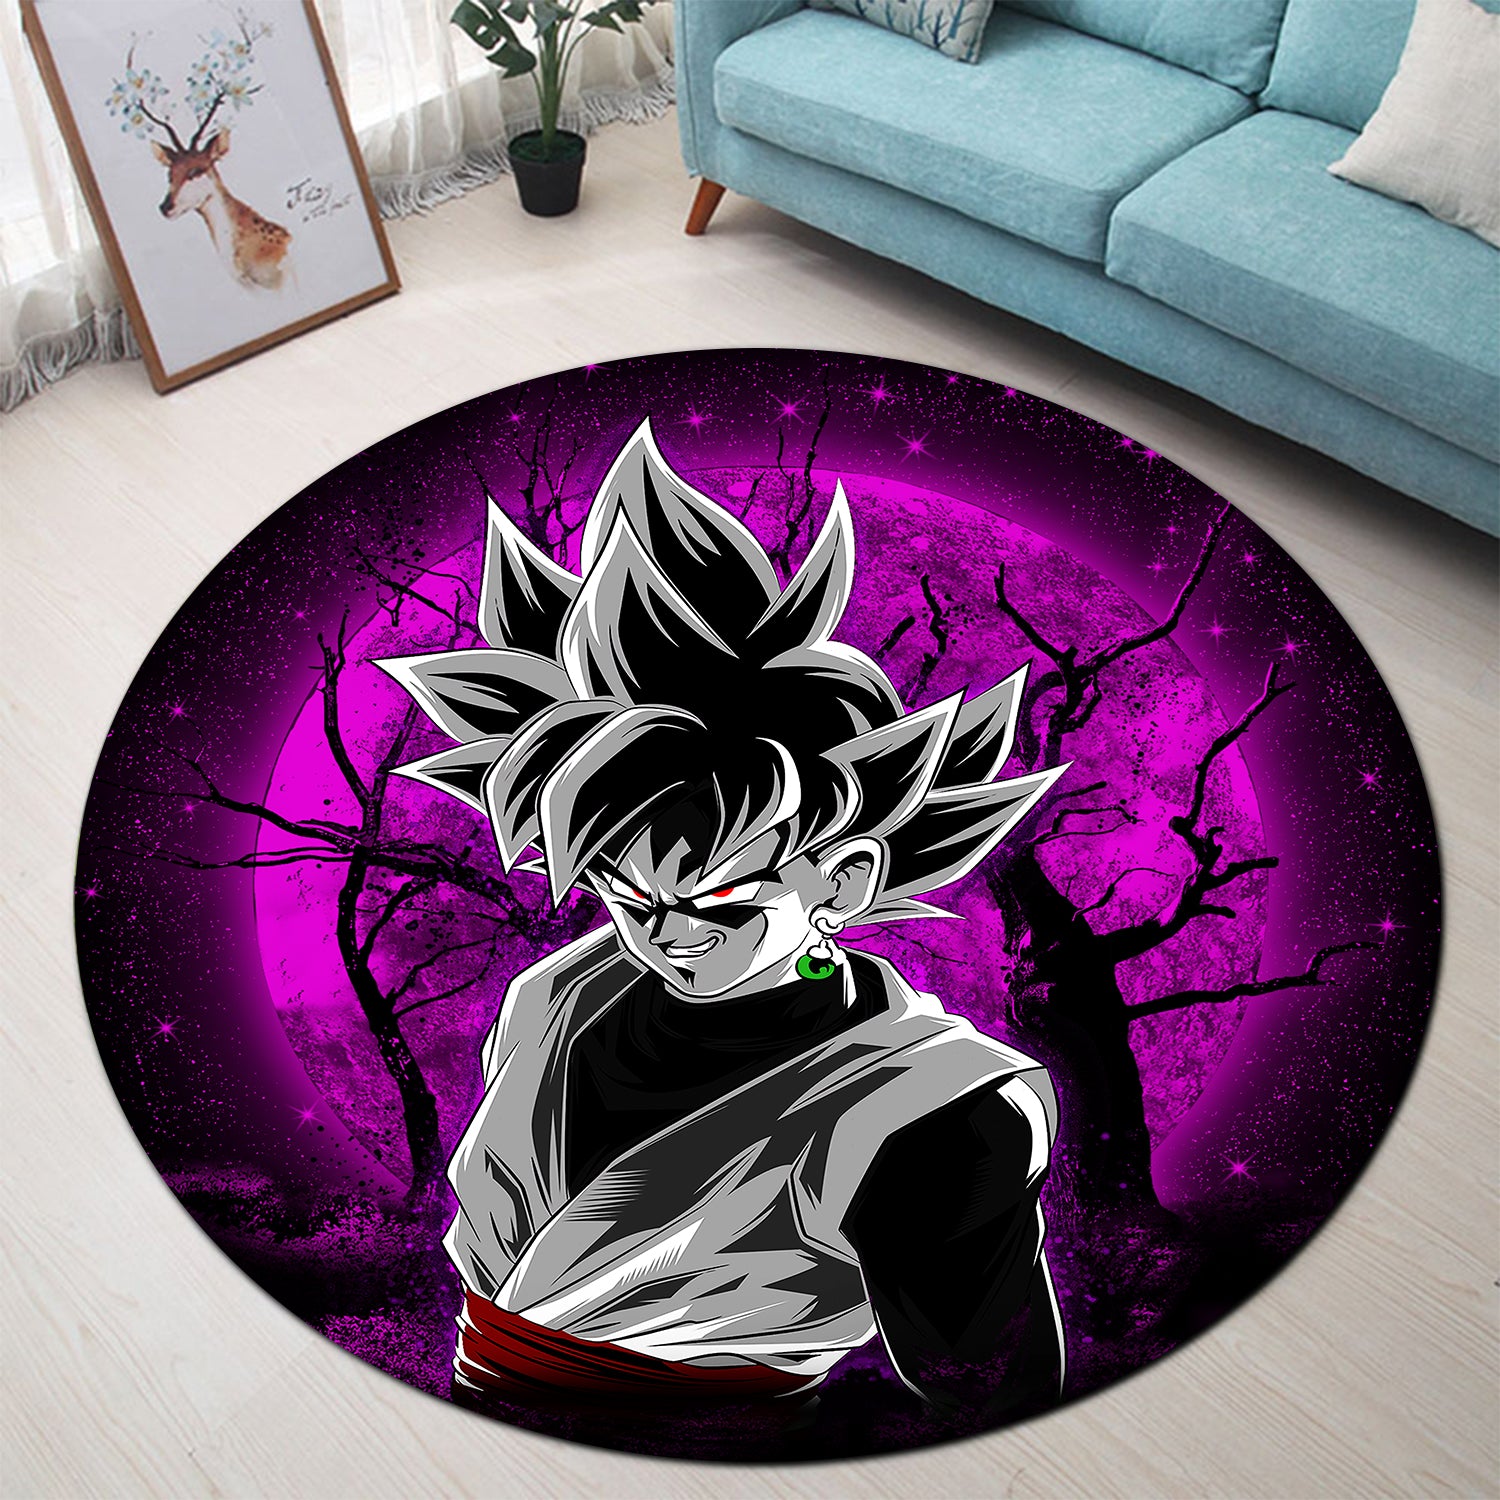 Goku Black Moonlight Round Carpet Rug Bedroom Livingroom Home Decor Nearkii